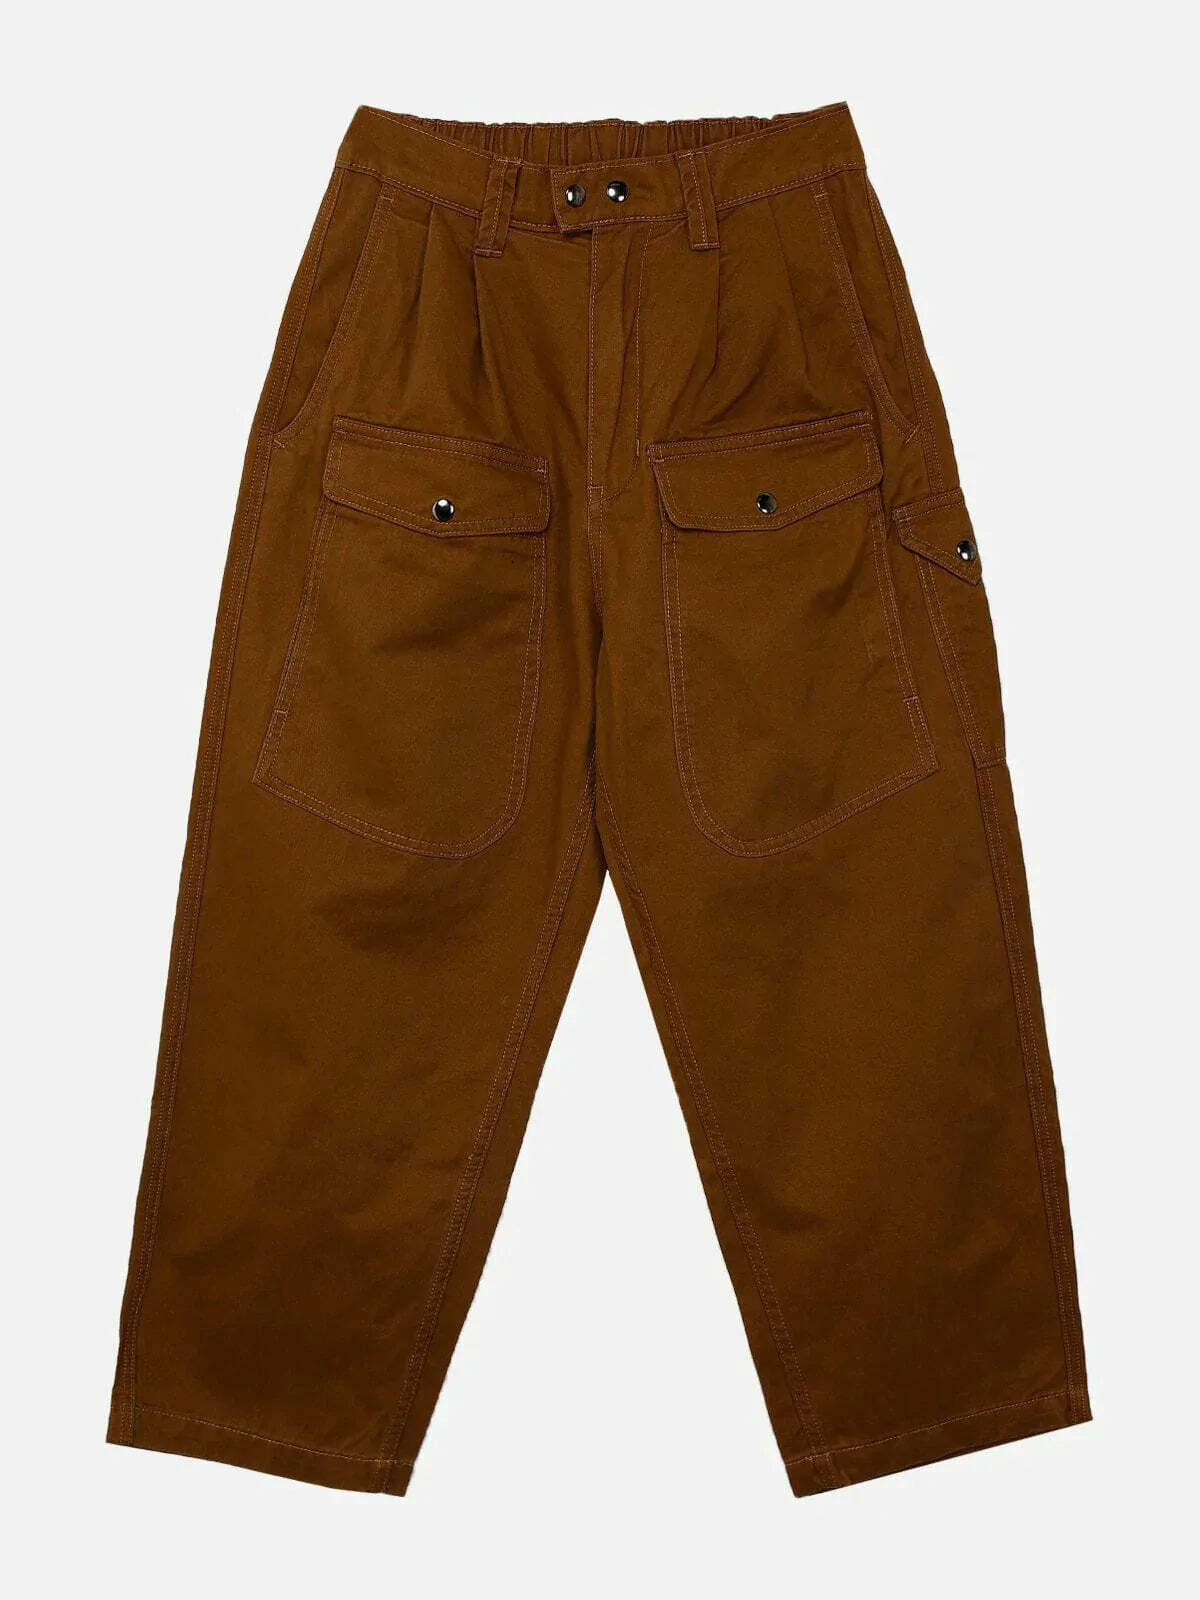 solid button pants sleek & urban streetwear 1086